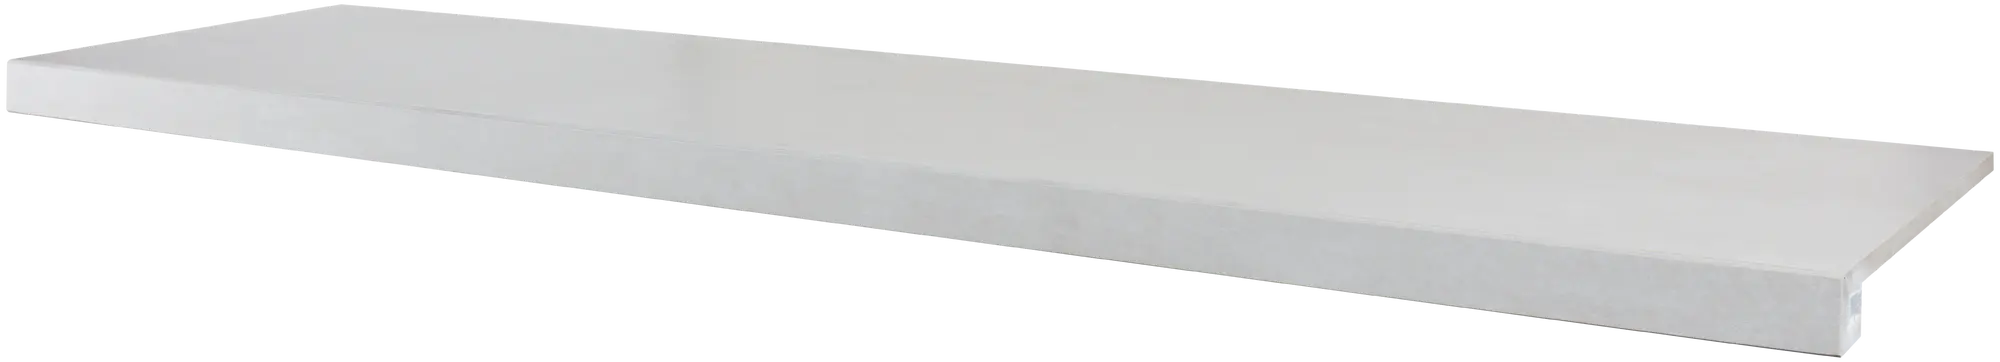 Peldaño de escalera porcelánico artens martins blanco 30x120 cm